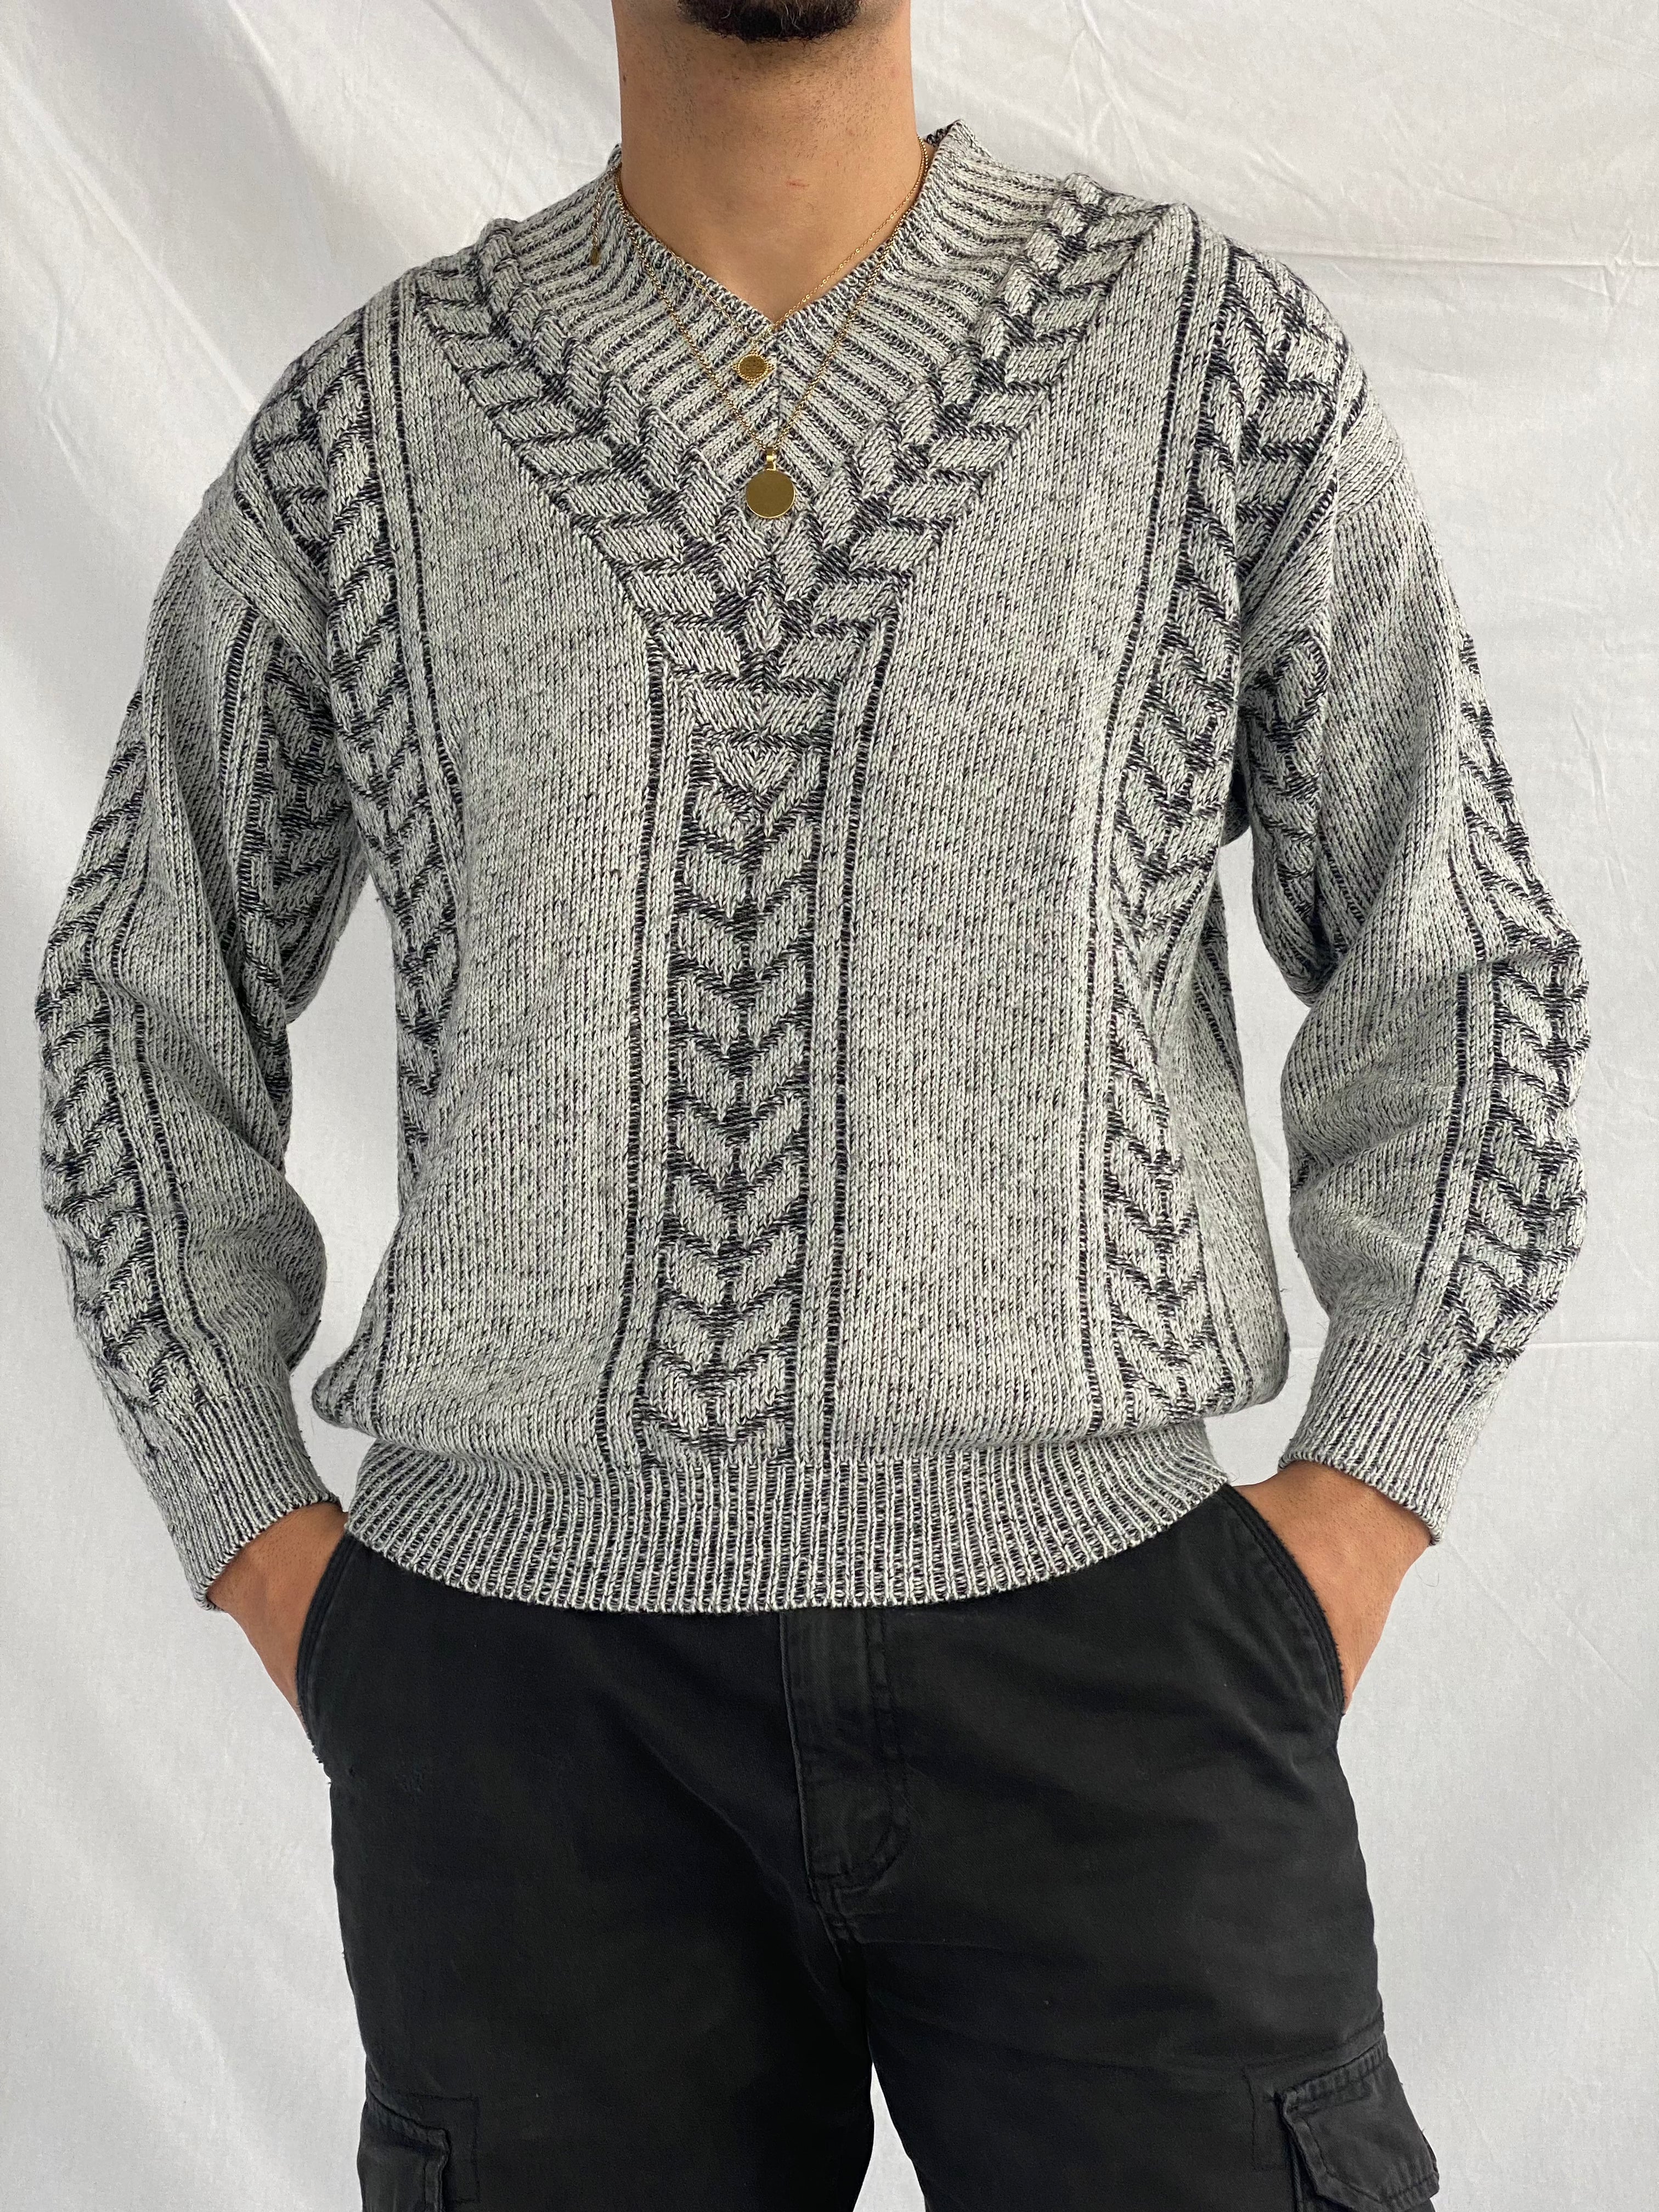 Vintage Knitted Sweater - Balagan Vintage Sweater 90s, knitted, knitted sweater, streetwear, vintage, vintage sweater, winter